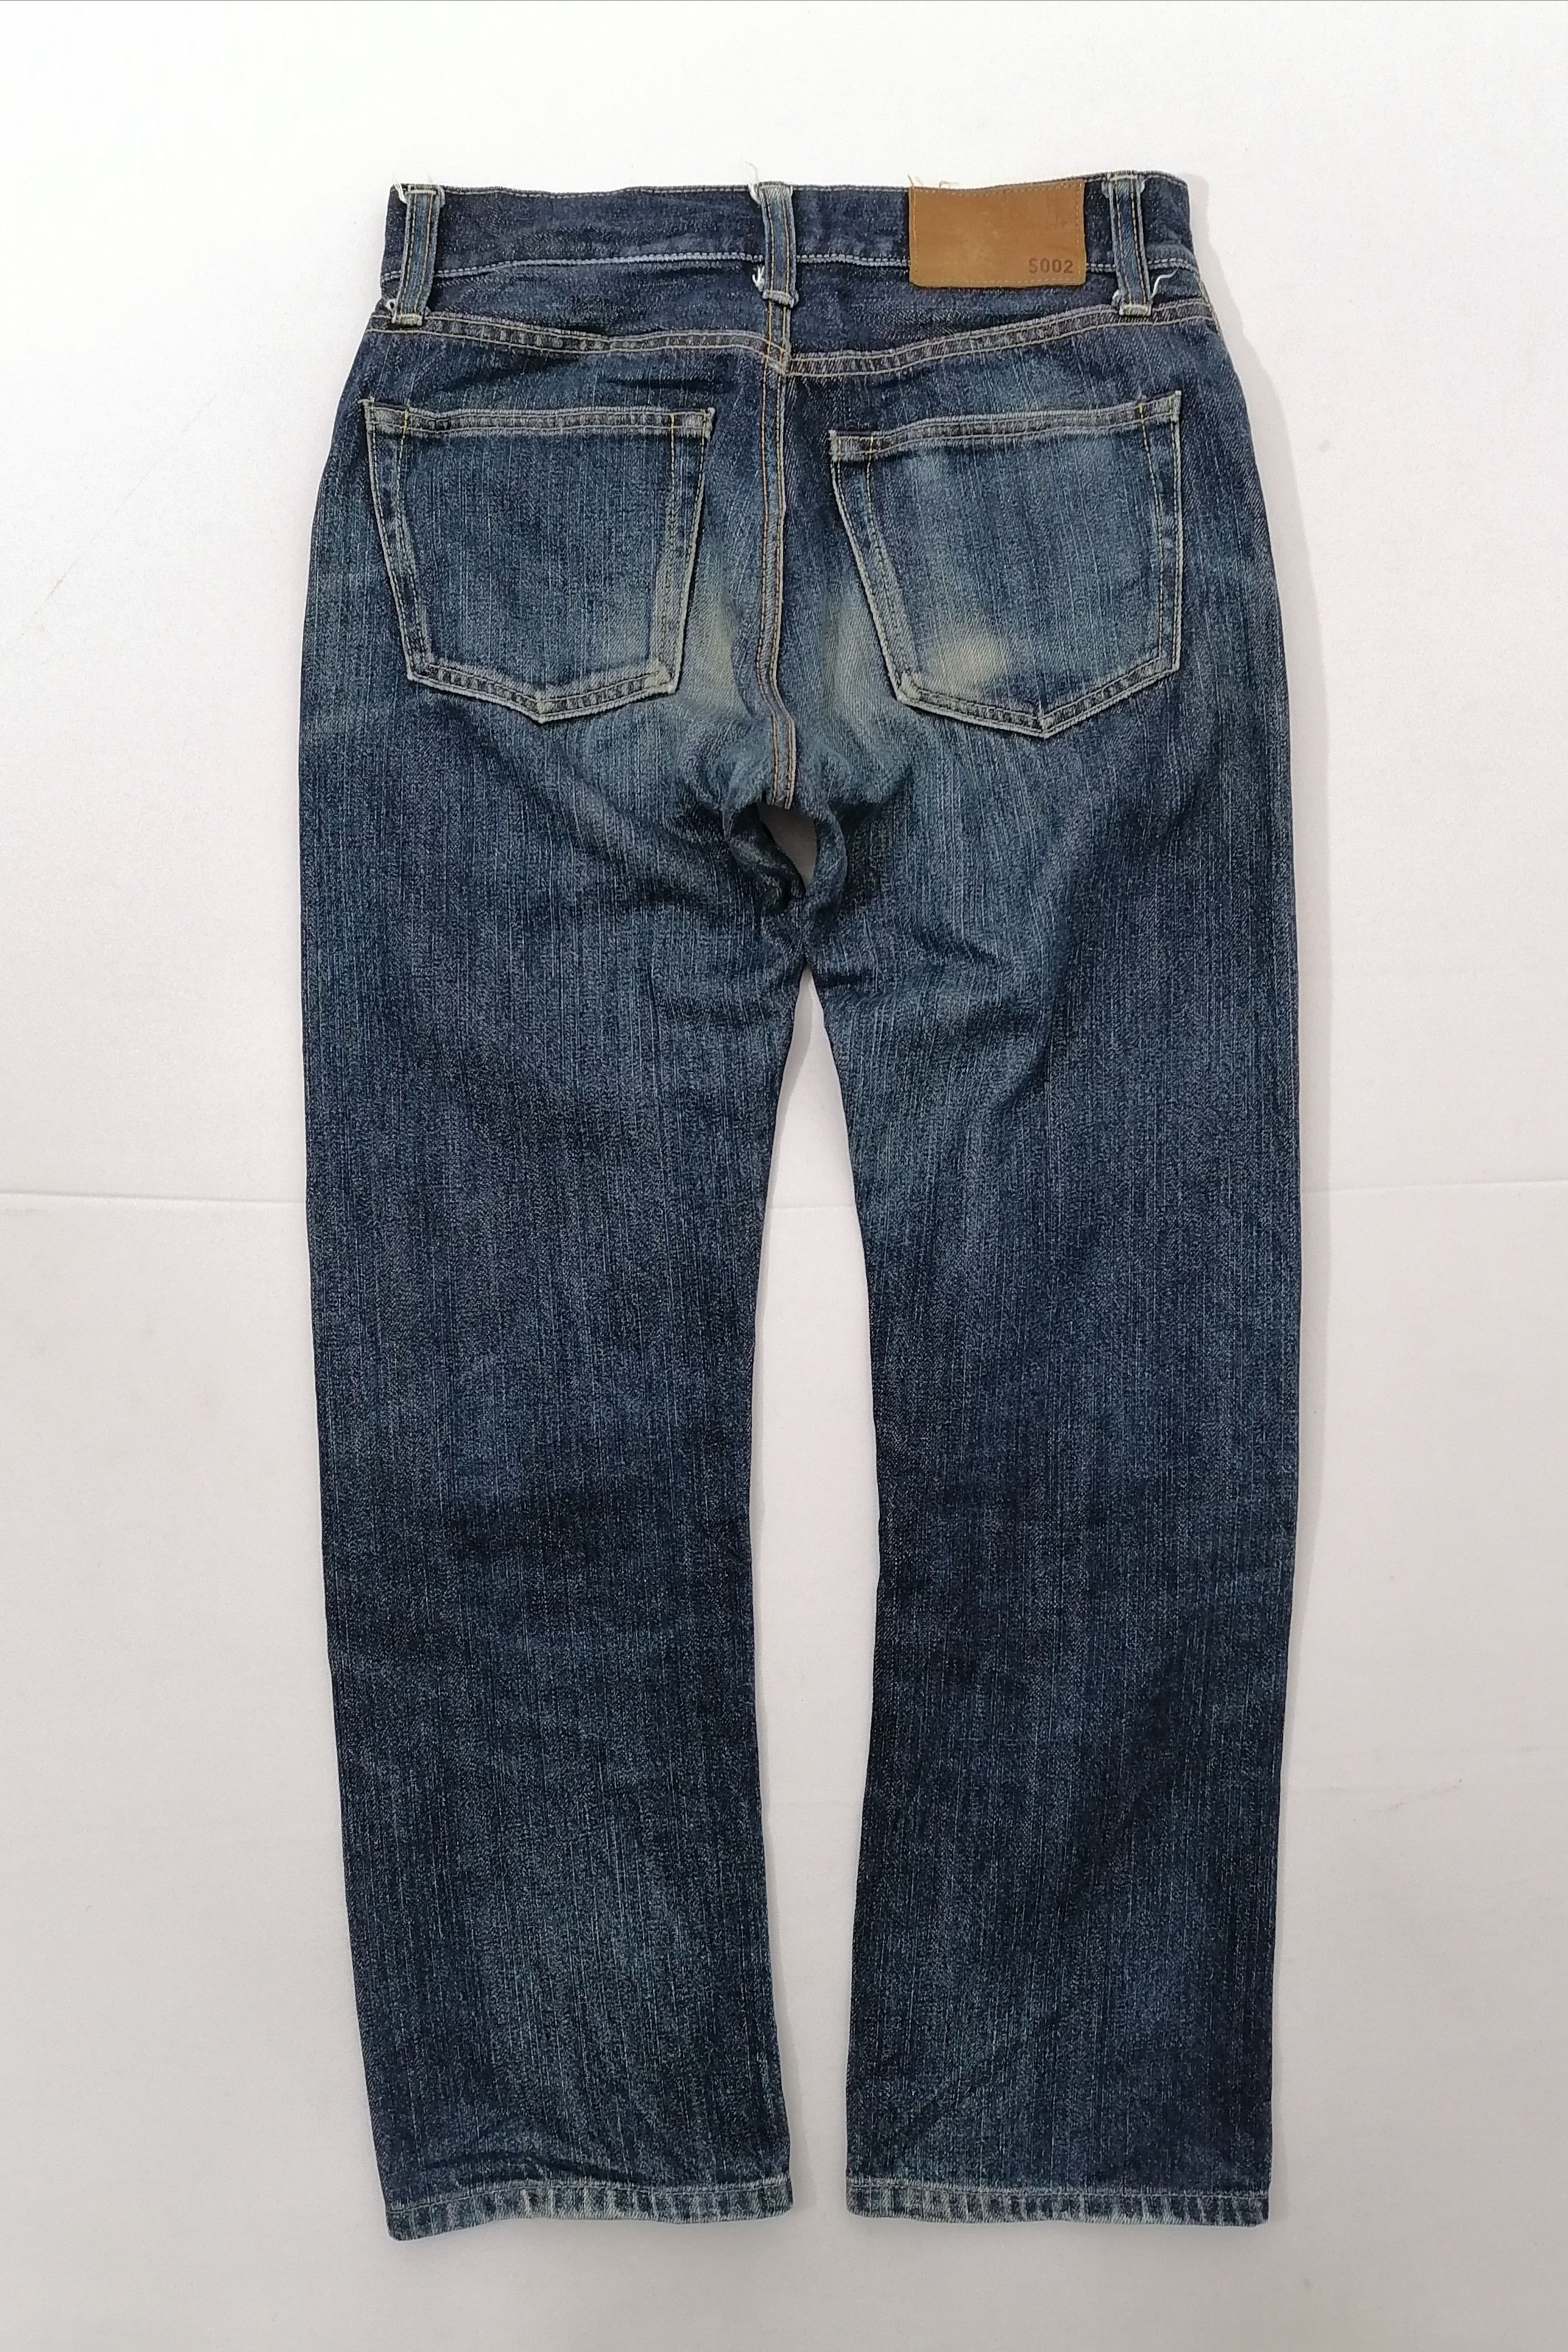 Uniqlo Uniqlo Regular Fit Straight Selvedge Denim Jeans Size US 32 / EU 48 - 3 Thumbnail